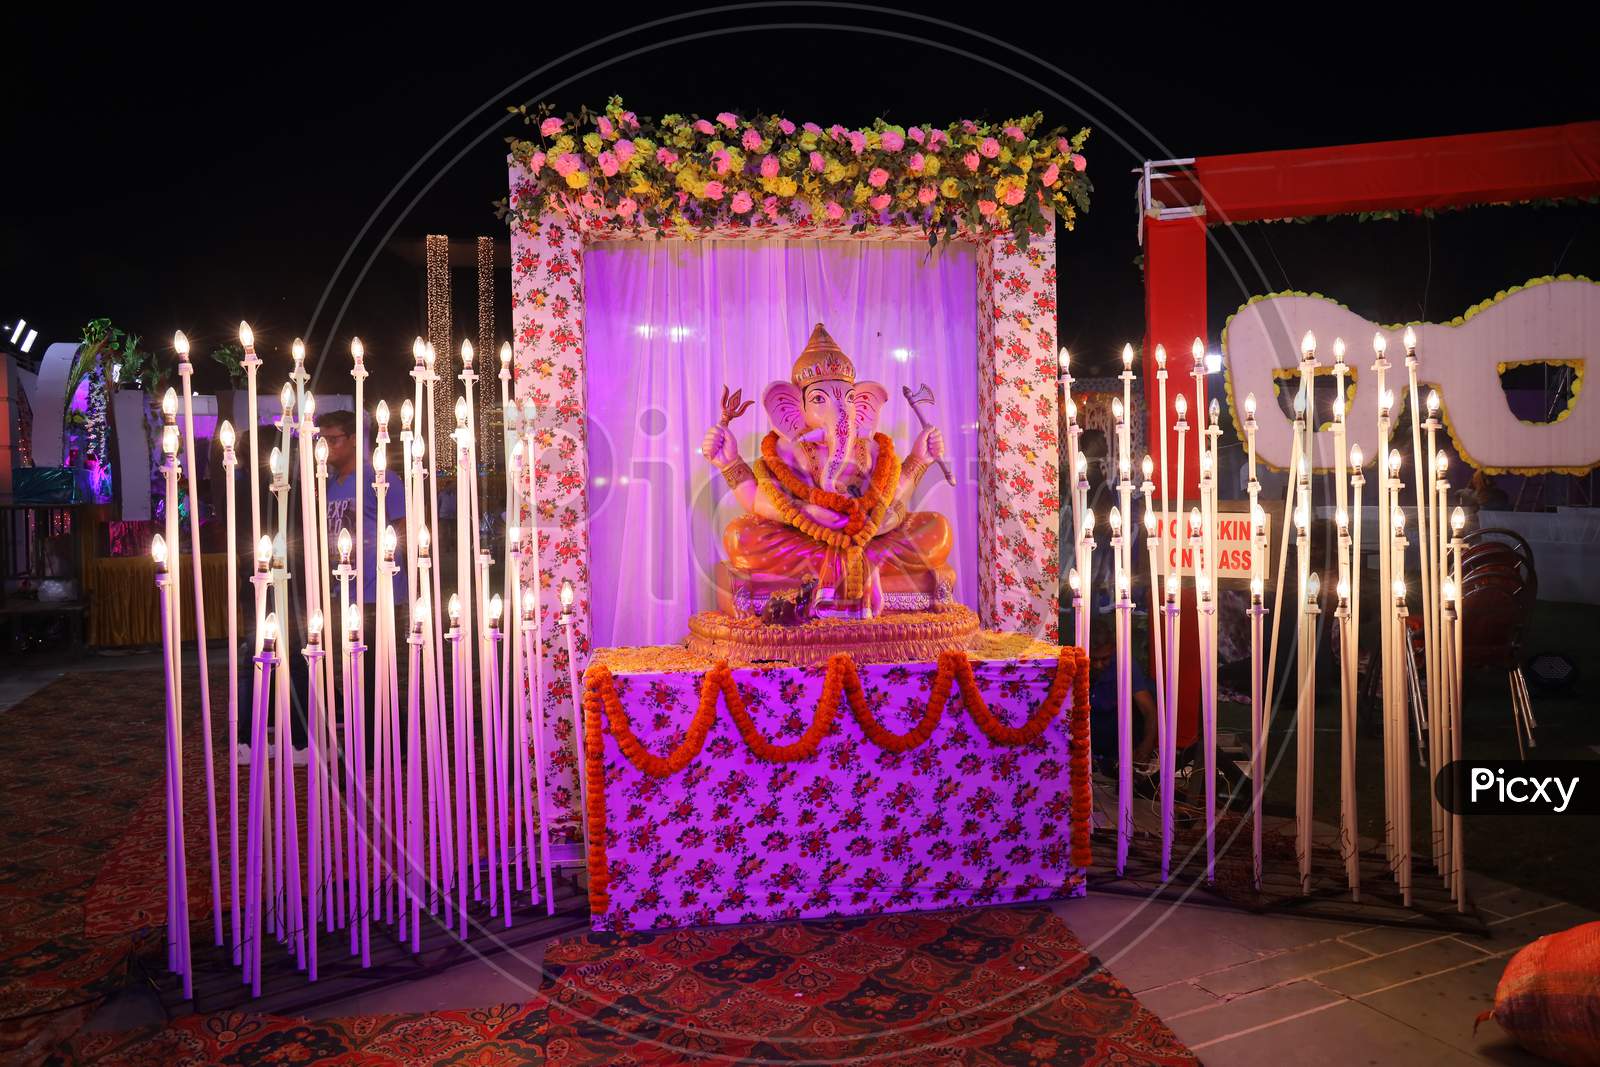 Lacha Paratha served in Indian wedding..